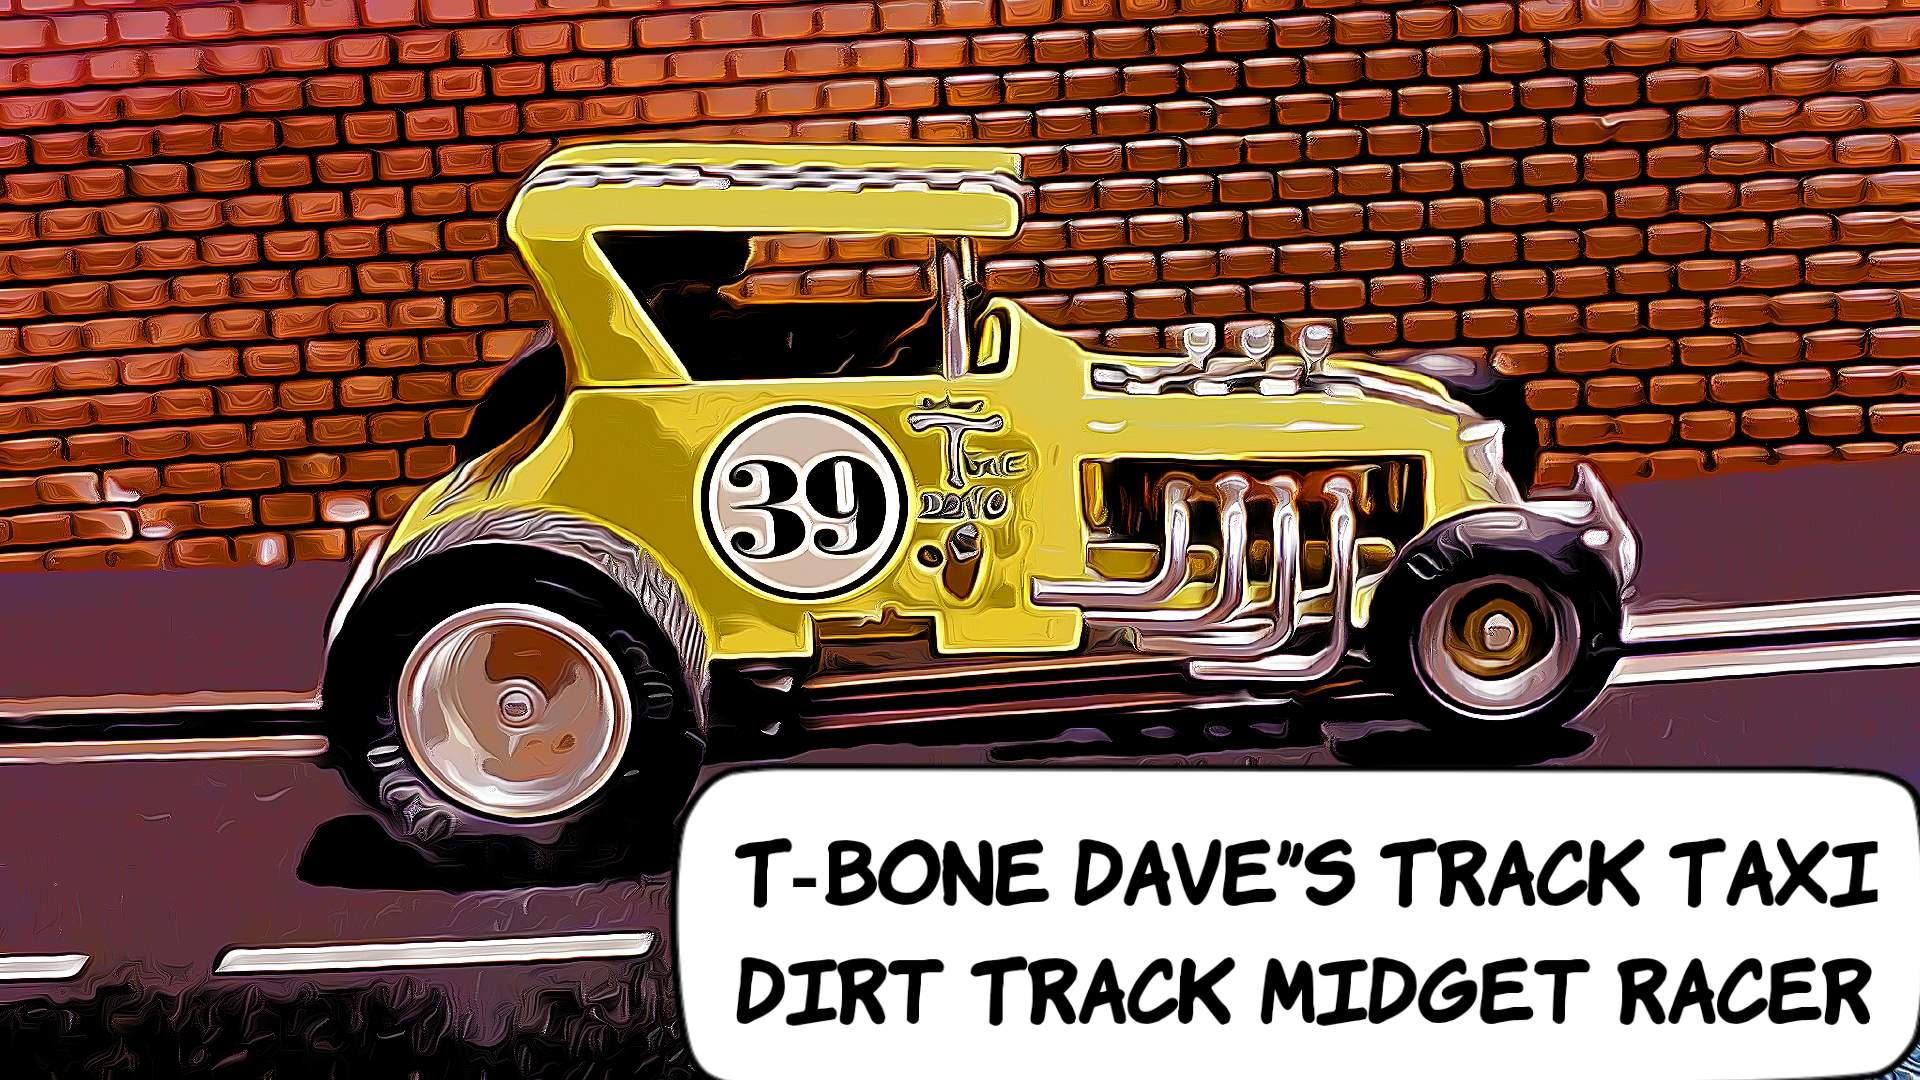 * Sale * Vintage Dirt Track Midget Racer 1/24 Scale T-Bone Dave’s Track Taxi Slot Car #39